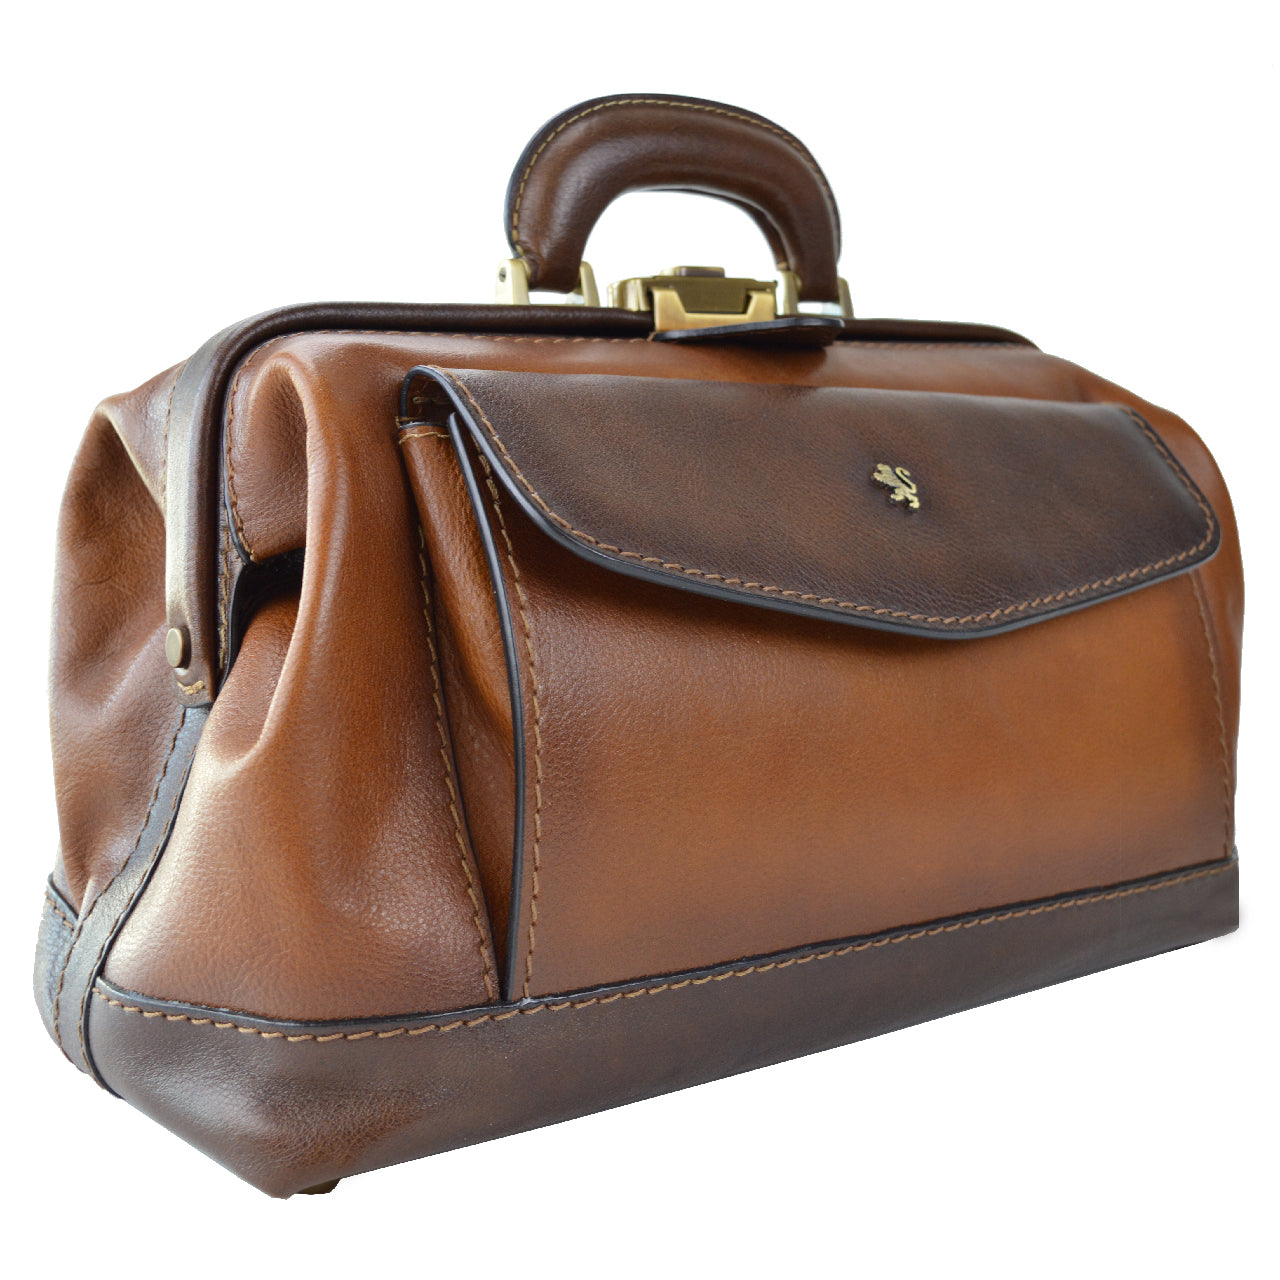 Pratesi Doctor Bag in genuine Italian leather